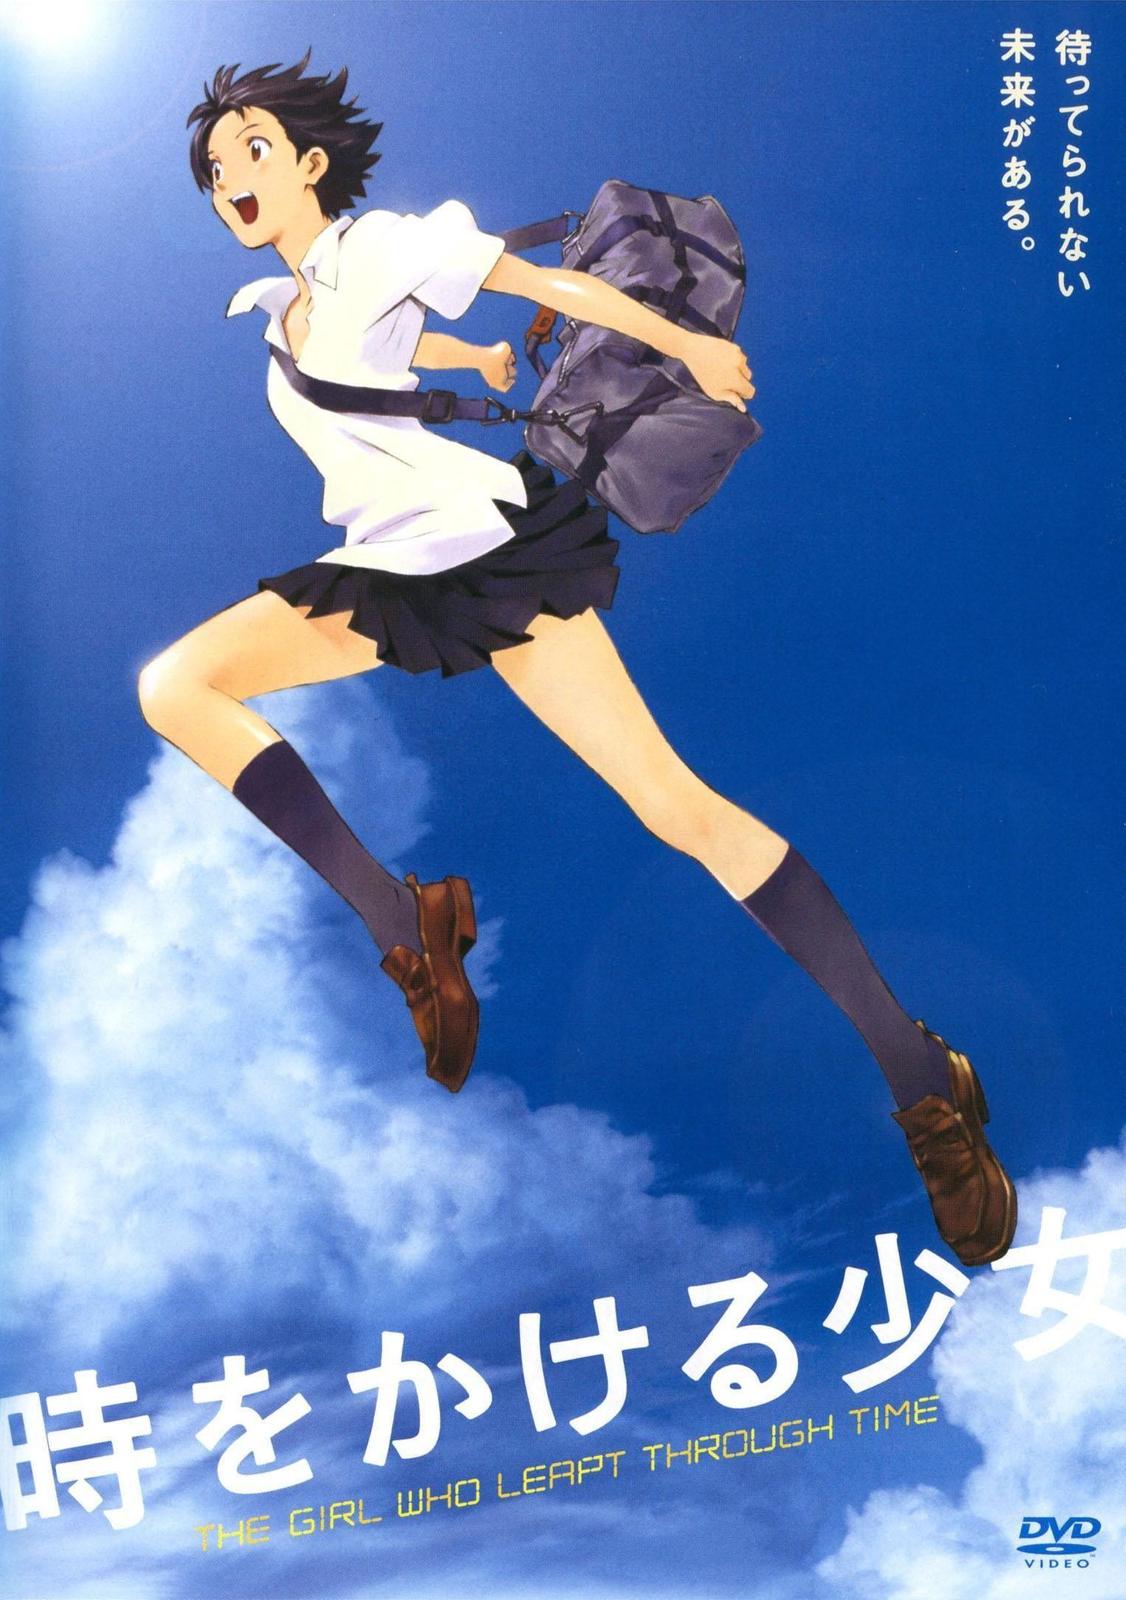 The Girl Who Leapt Through Time Movie Poster Anime Manga Art Film Print 24x36